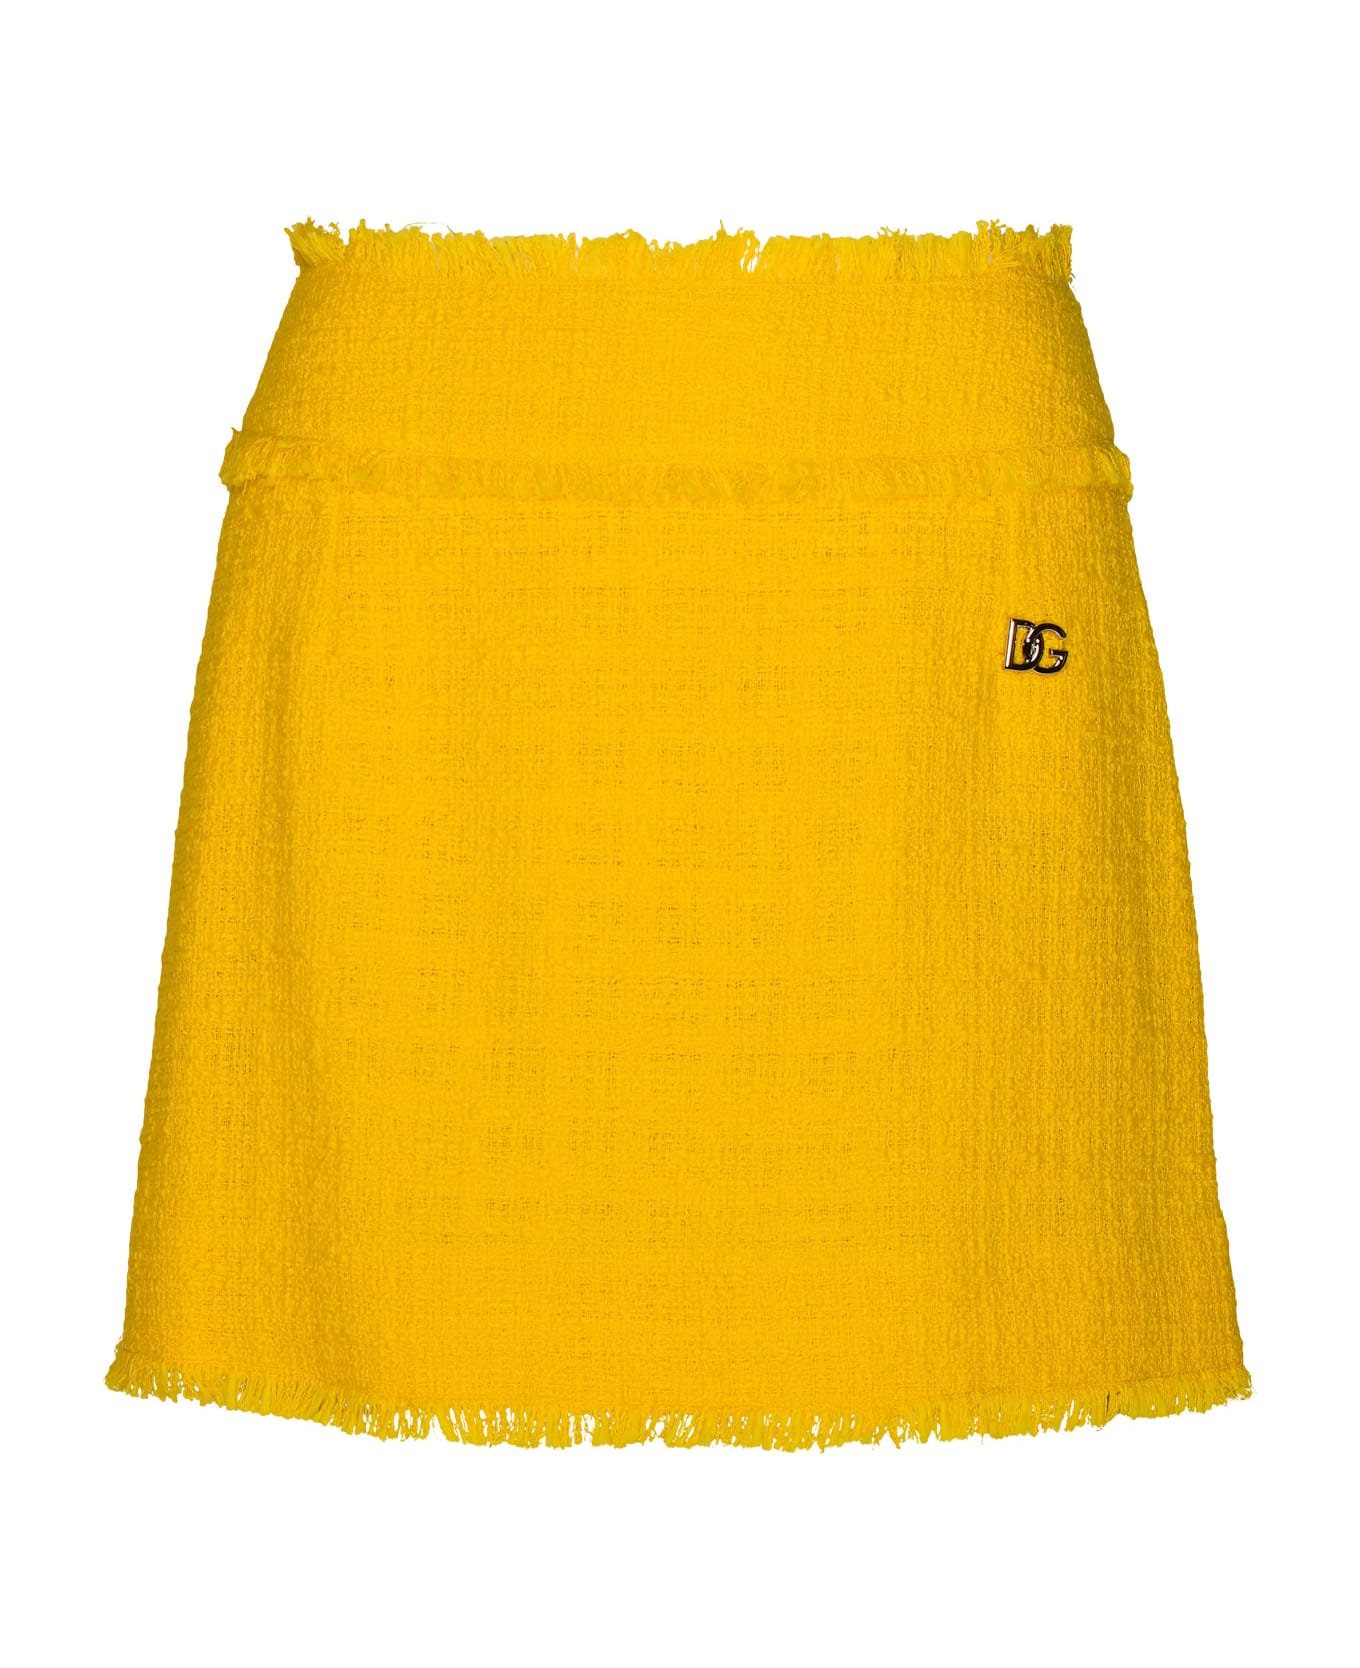 Dolce & Gabbana Yellow Cotton Blend Miniskirt - Yellow